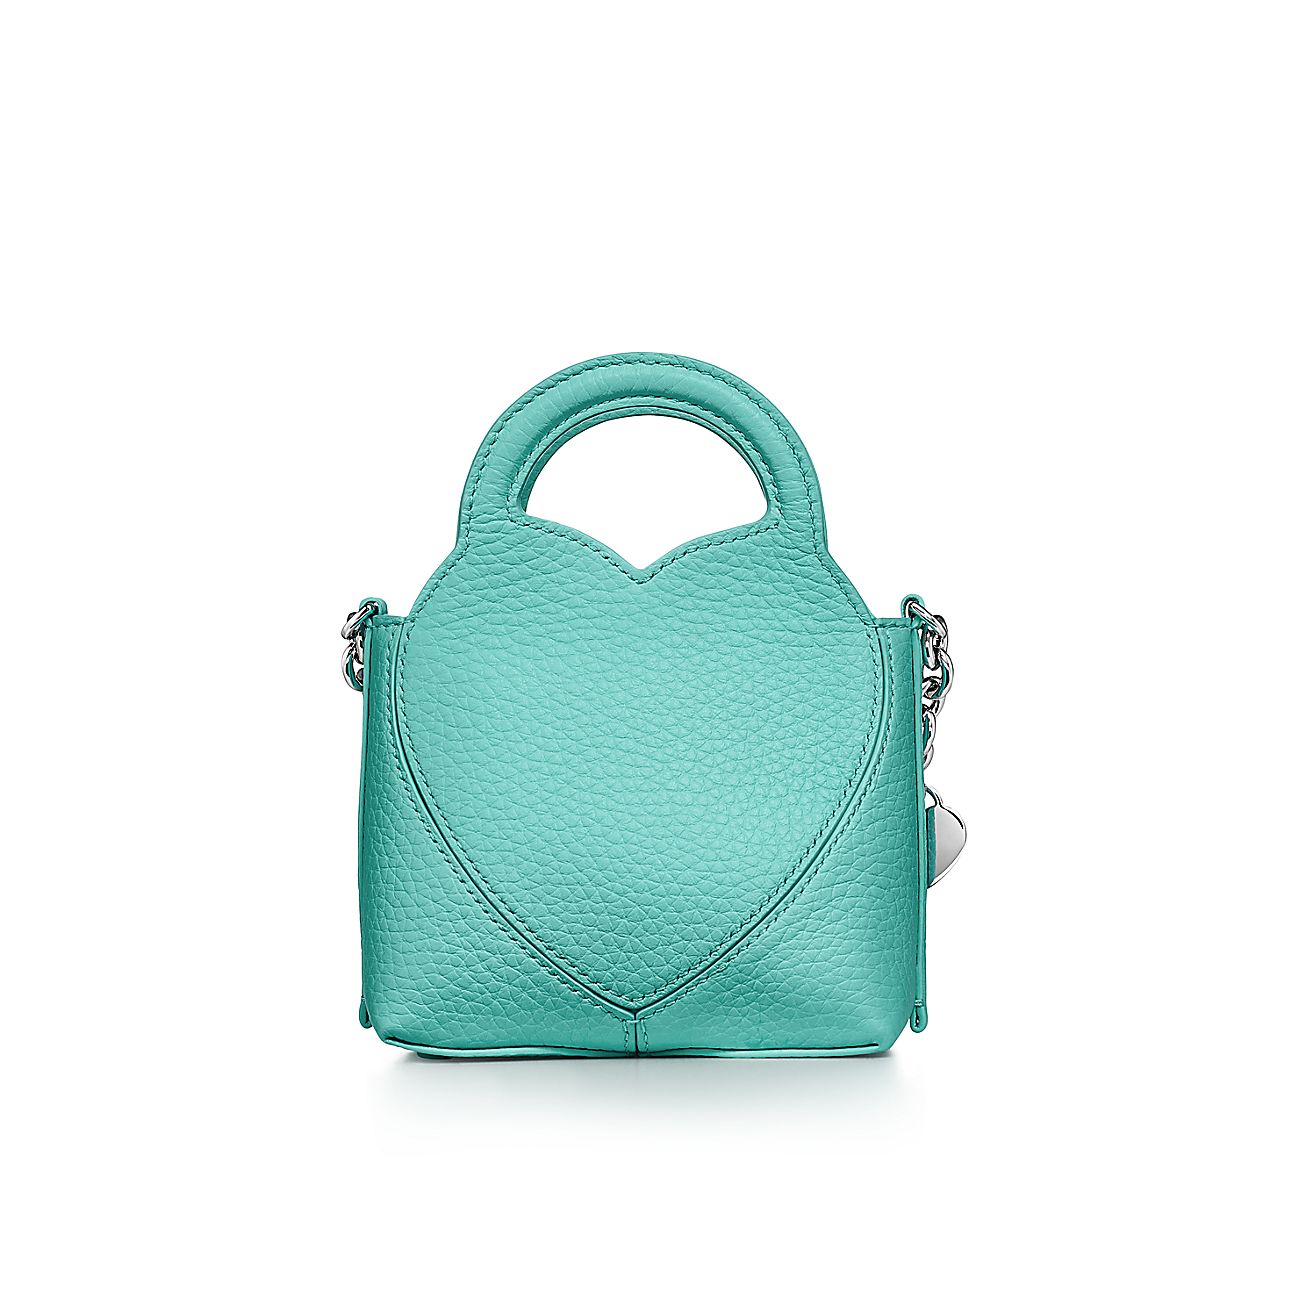 Little blue bag 🩵 @Tiffany&Co., tiffanyandco